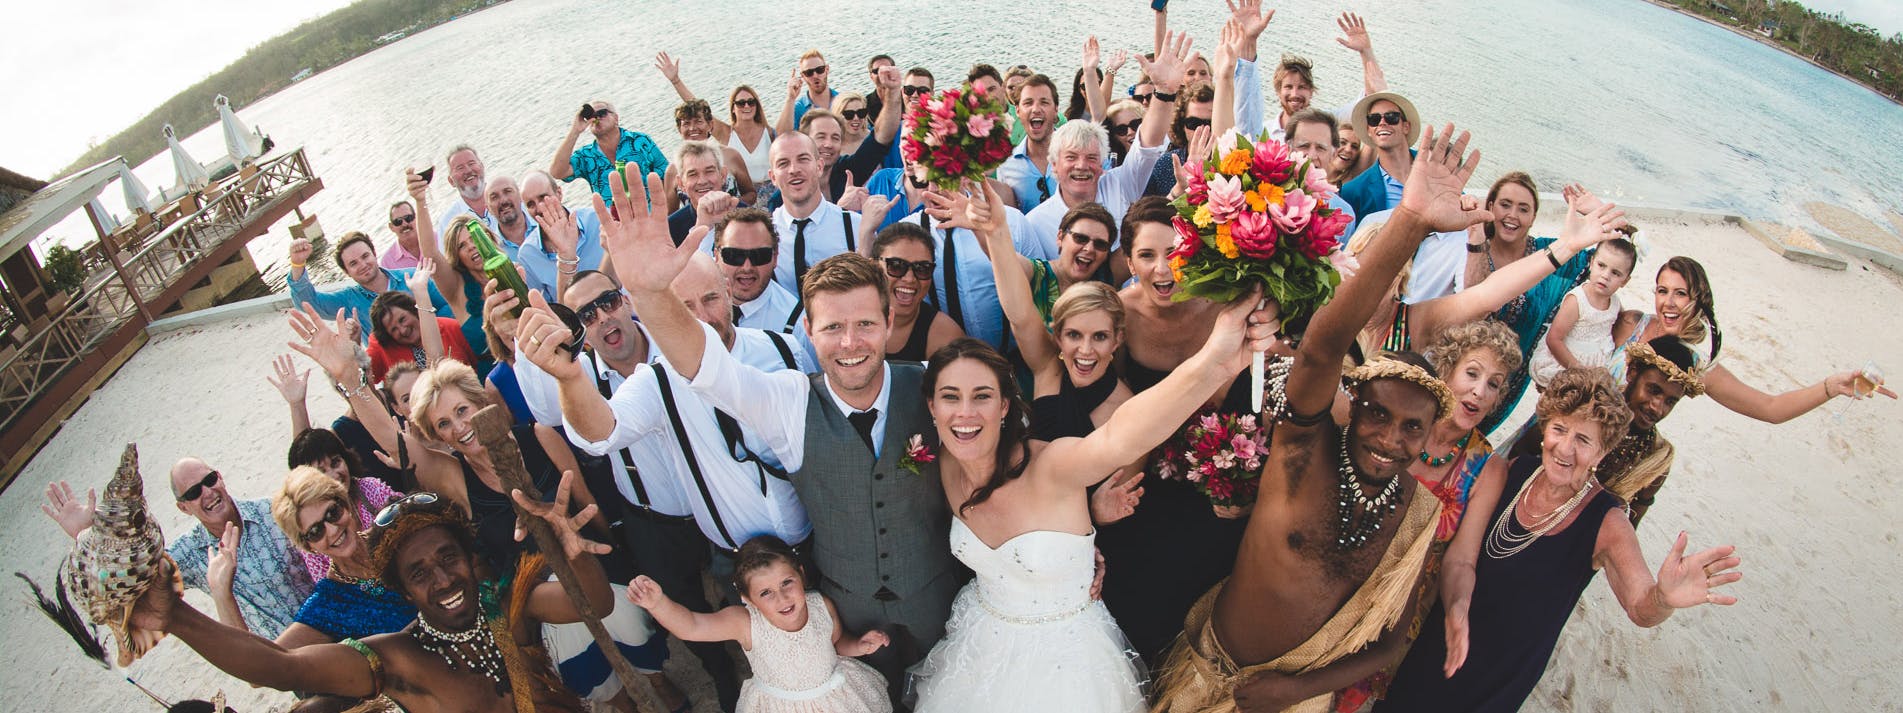 Wedding Family & Friends photo on Coconut Beach #erakorbeachweddings #weddingceremonyonthebeachsouthpacific